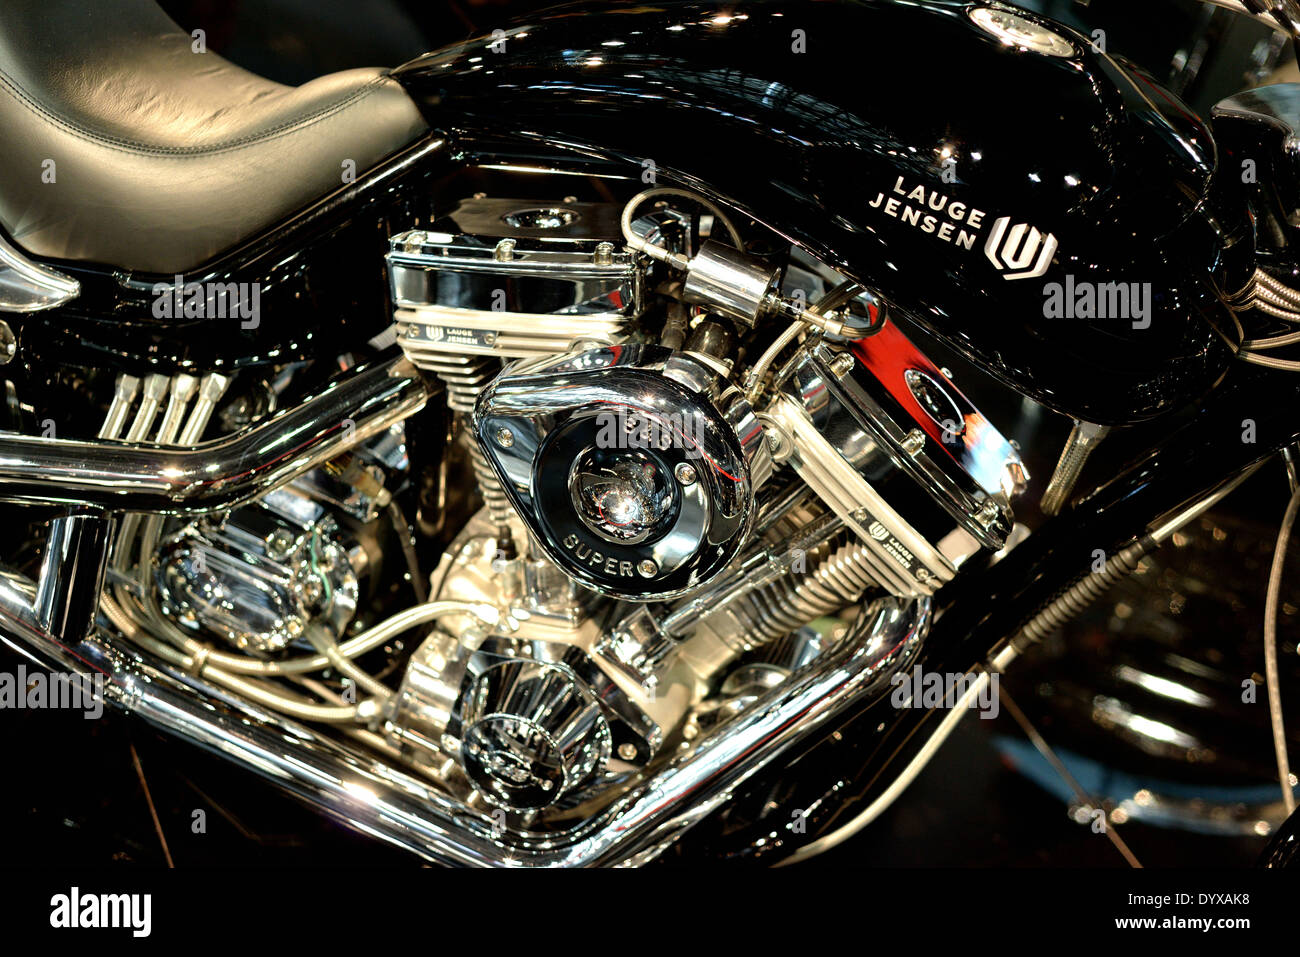 Lauge Jensen engine detail Stock Photo